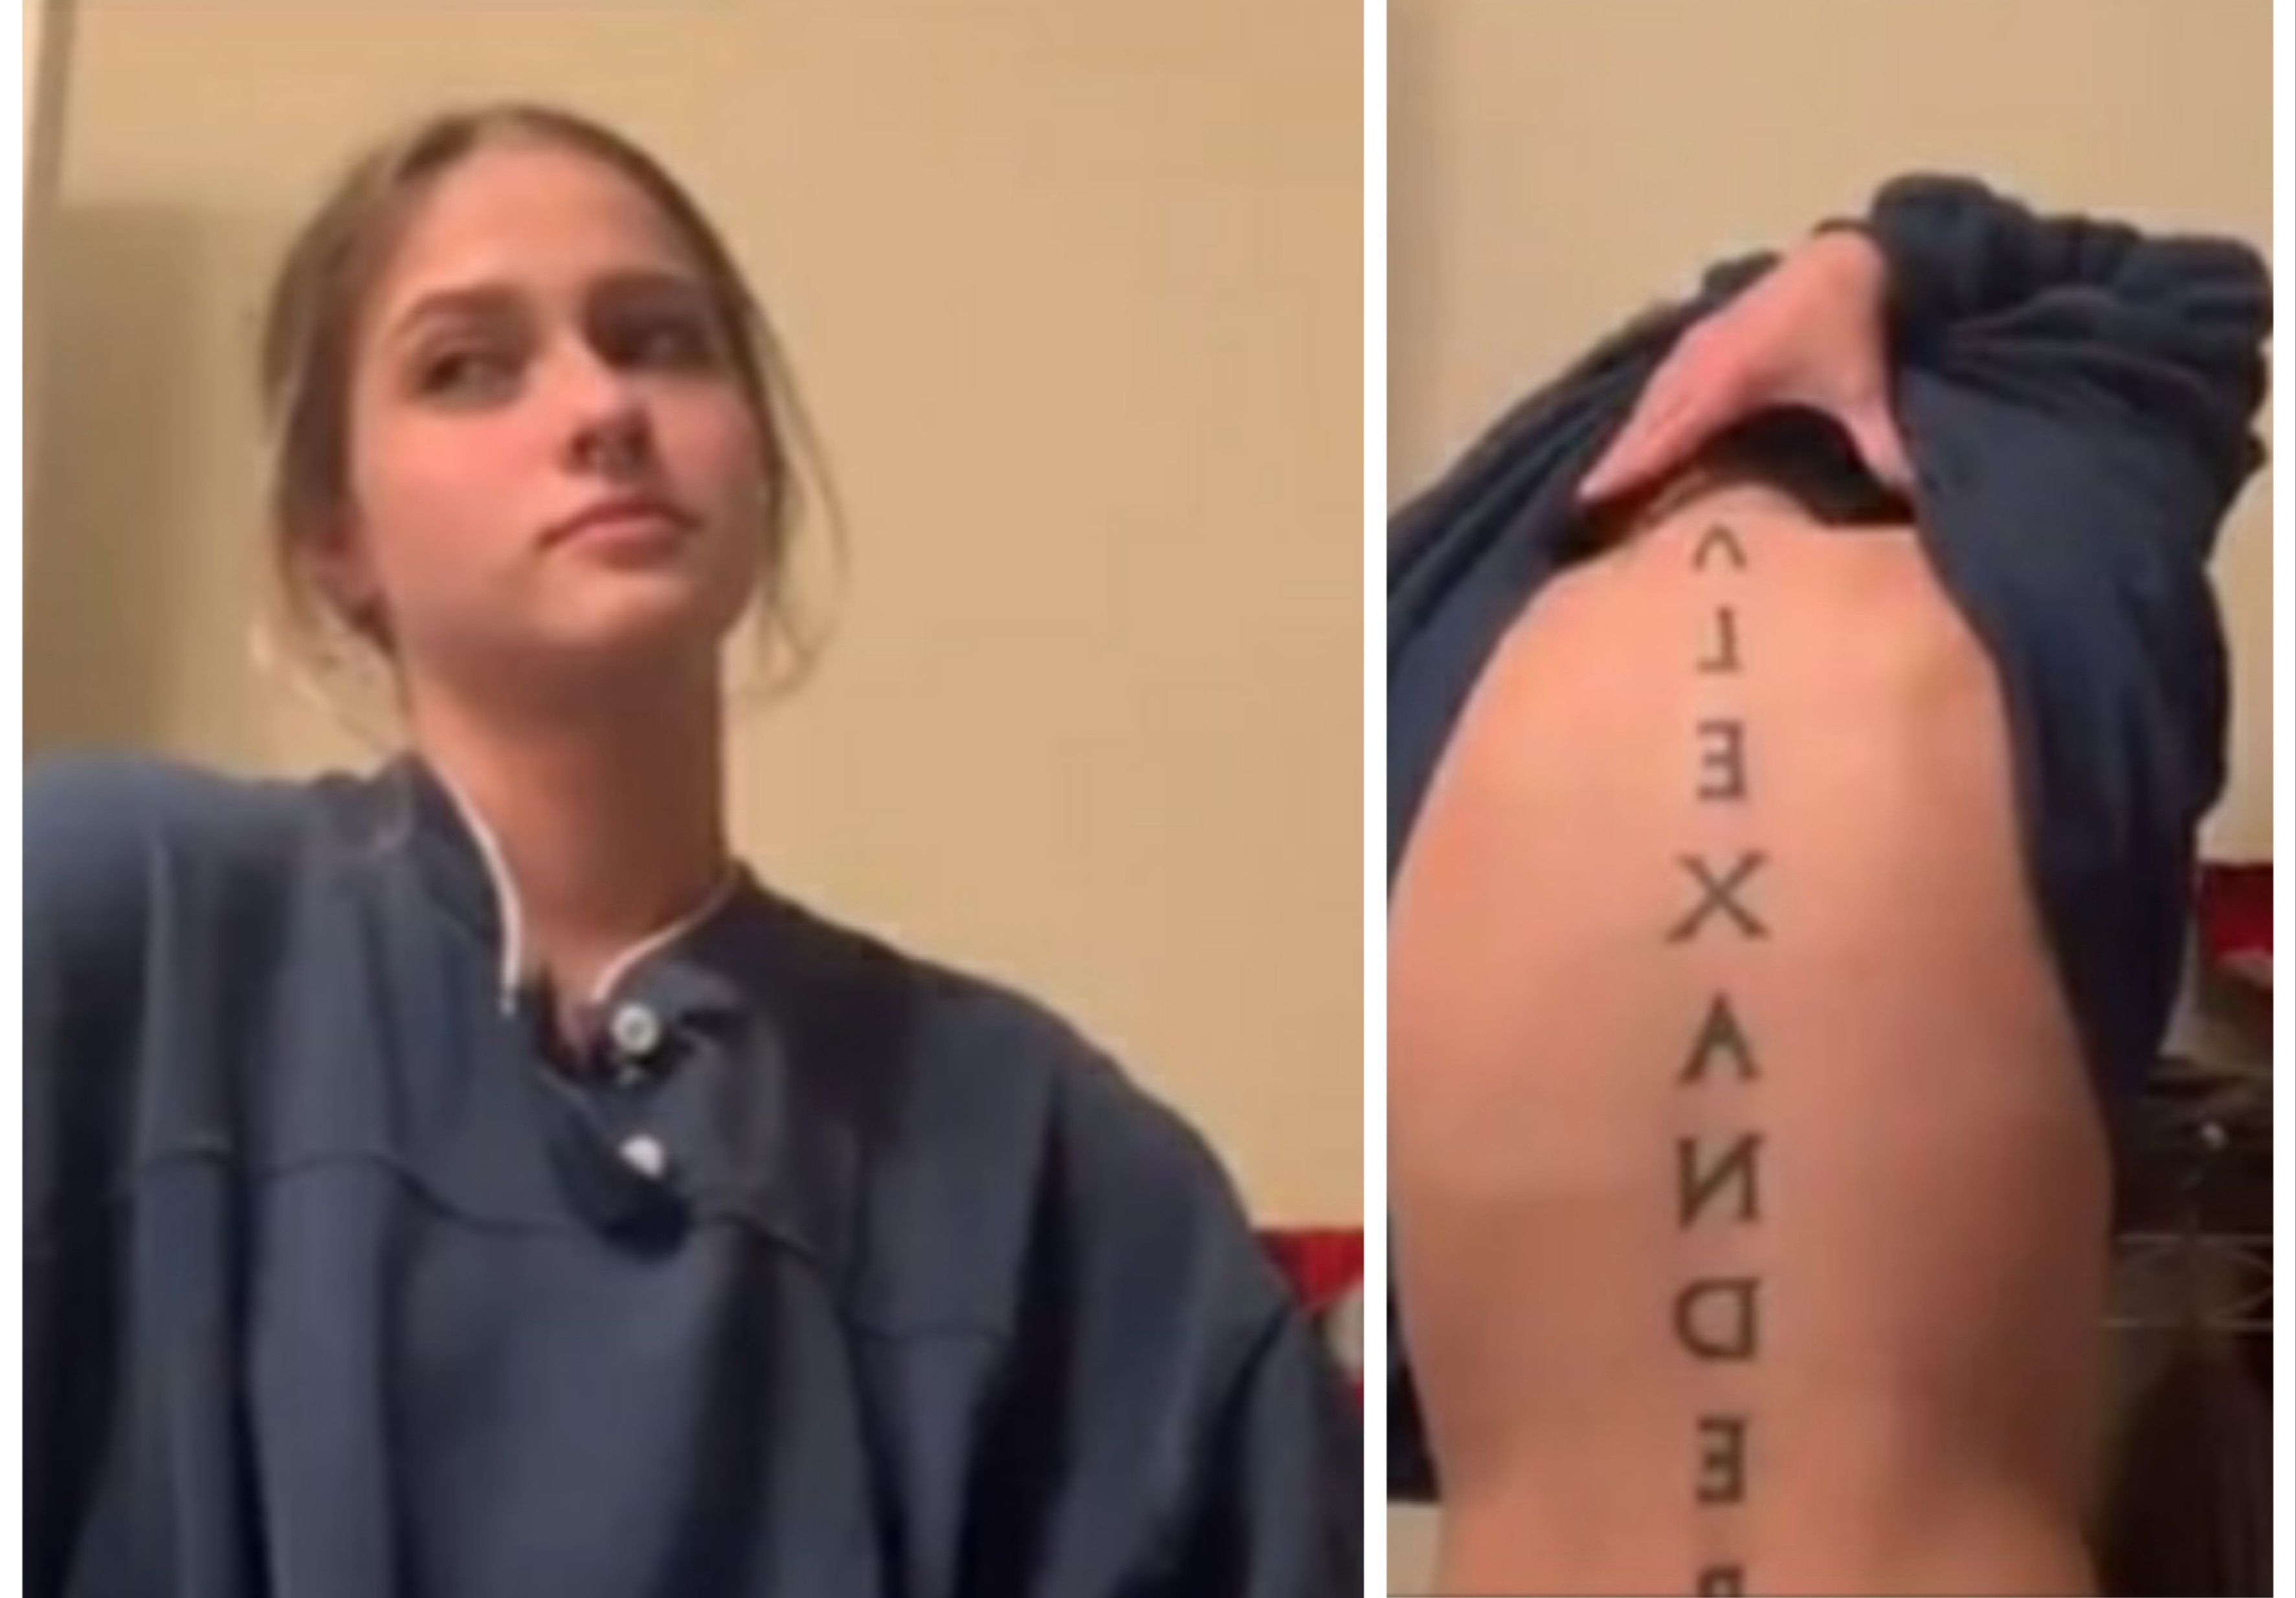 Wanita memamerkan tato punggung dengan ukuran besar nama pacarnya - yang dia dapatkan tepat sebelum pasangan itu putus.